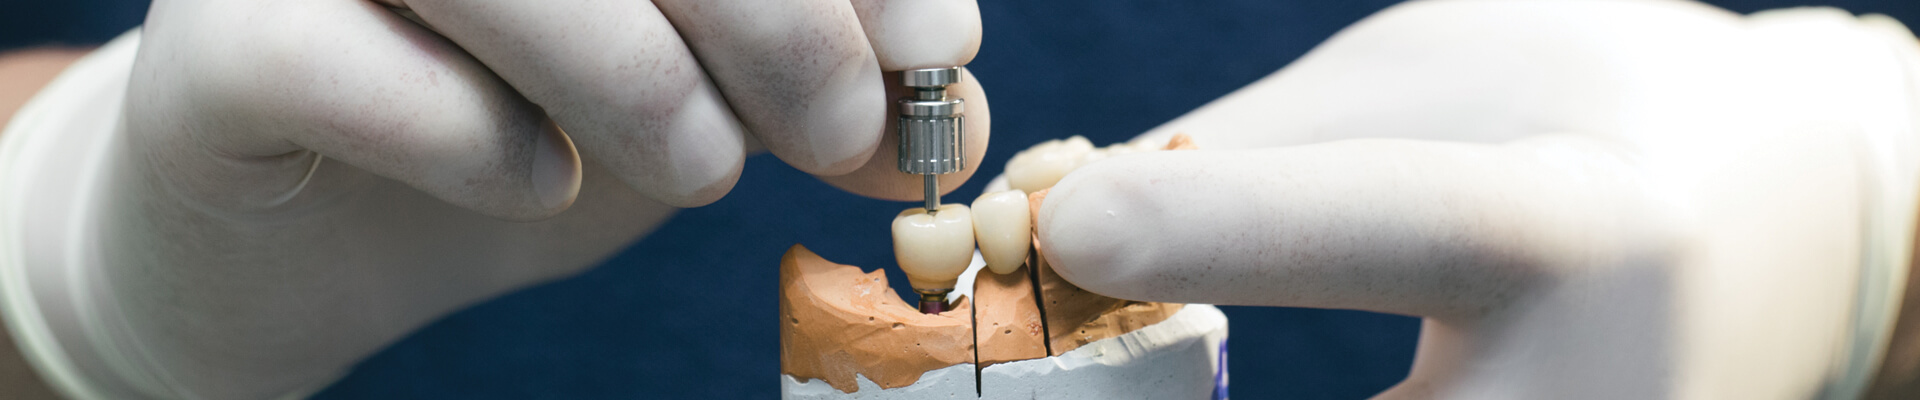 Dental implant prostho work on gypsum model